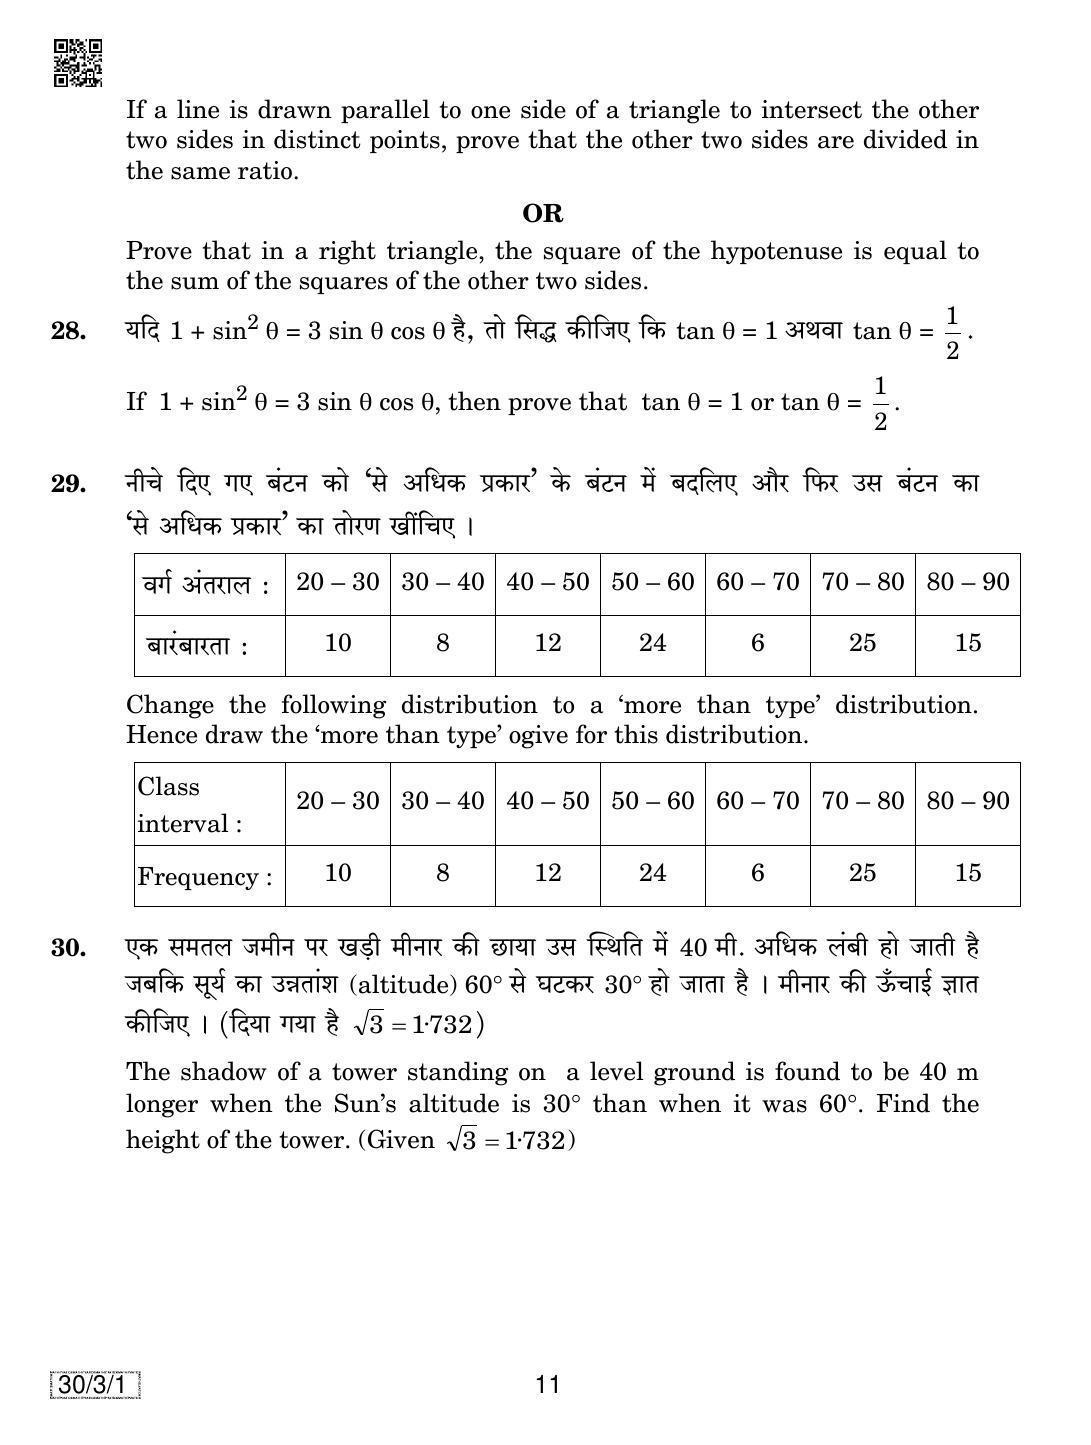 CBSE Class 10 30-3-1 MATHEMATICS 2019 Question Paper - Page 11